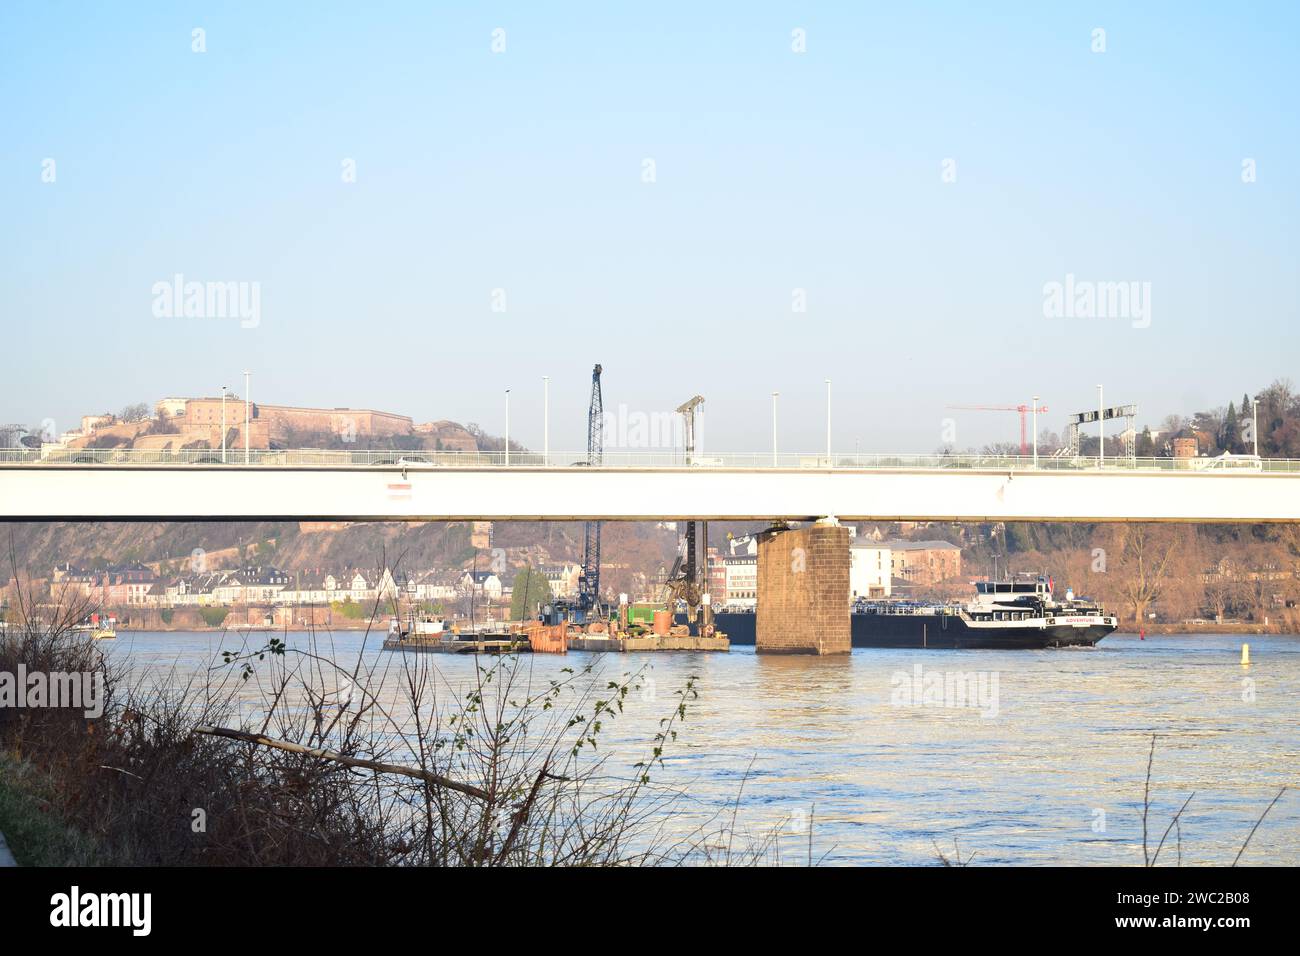 Pfaffendorfer Brücke, construction siste with cargos ships still passing Stock Photo